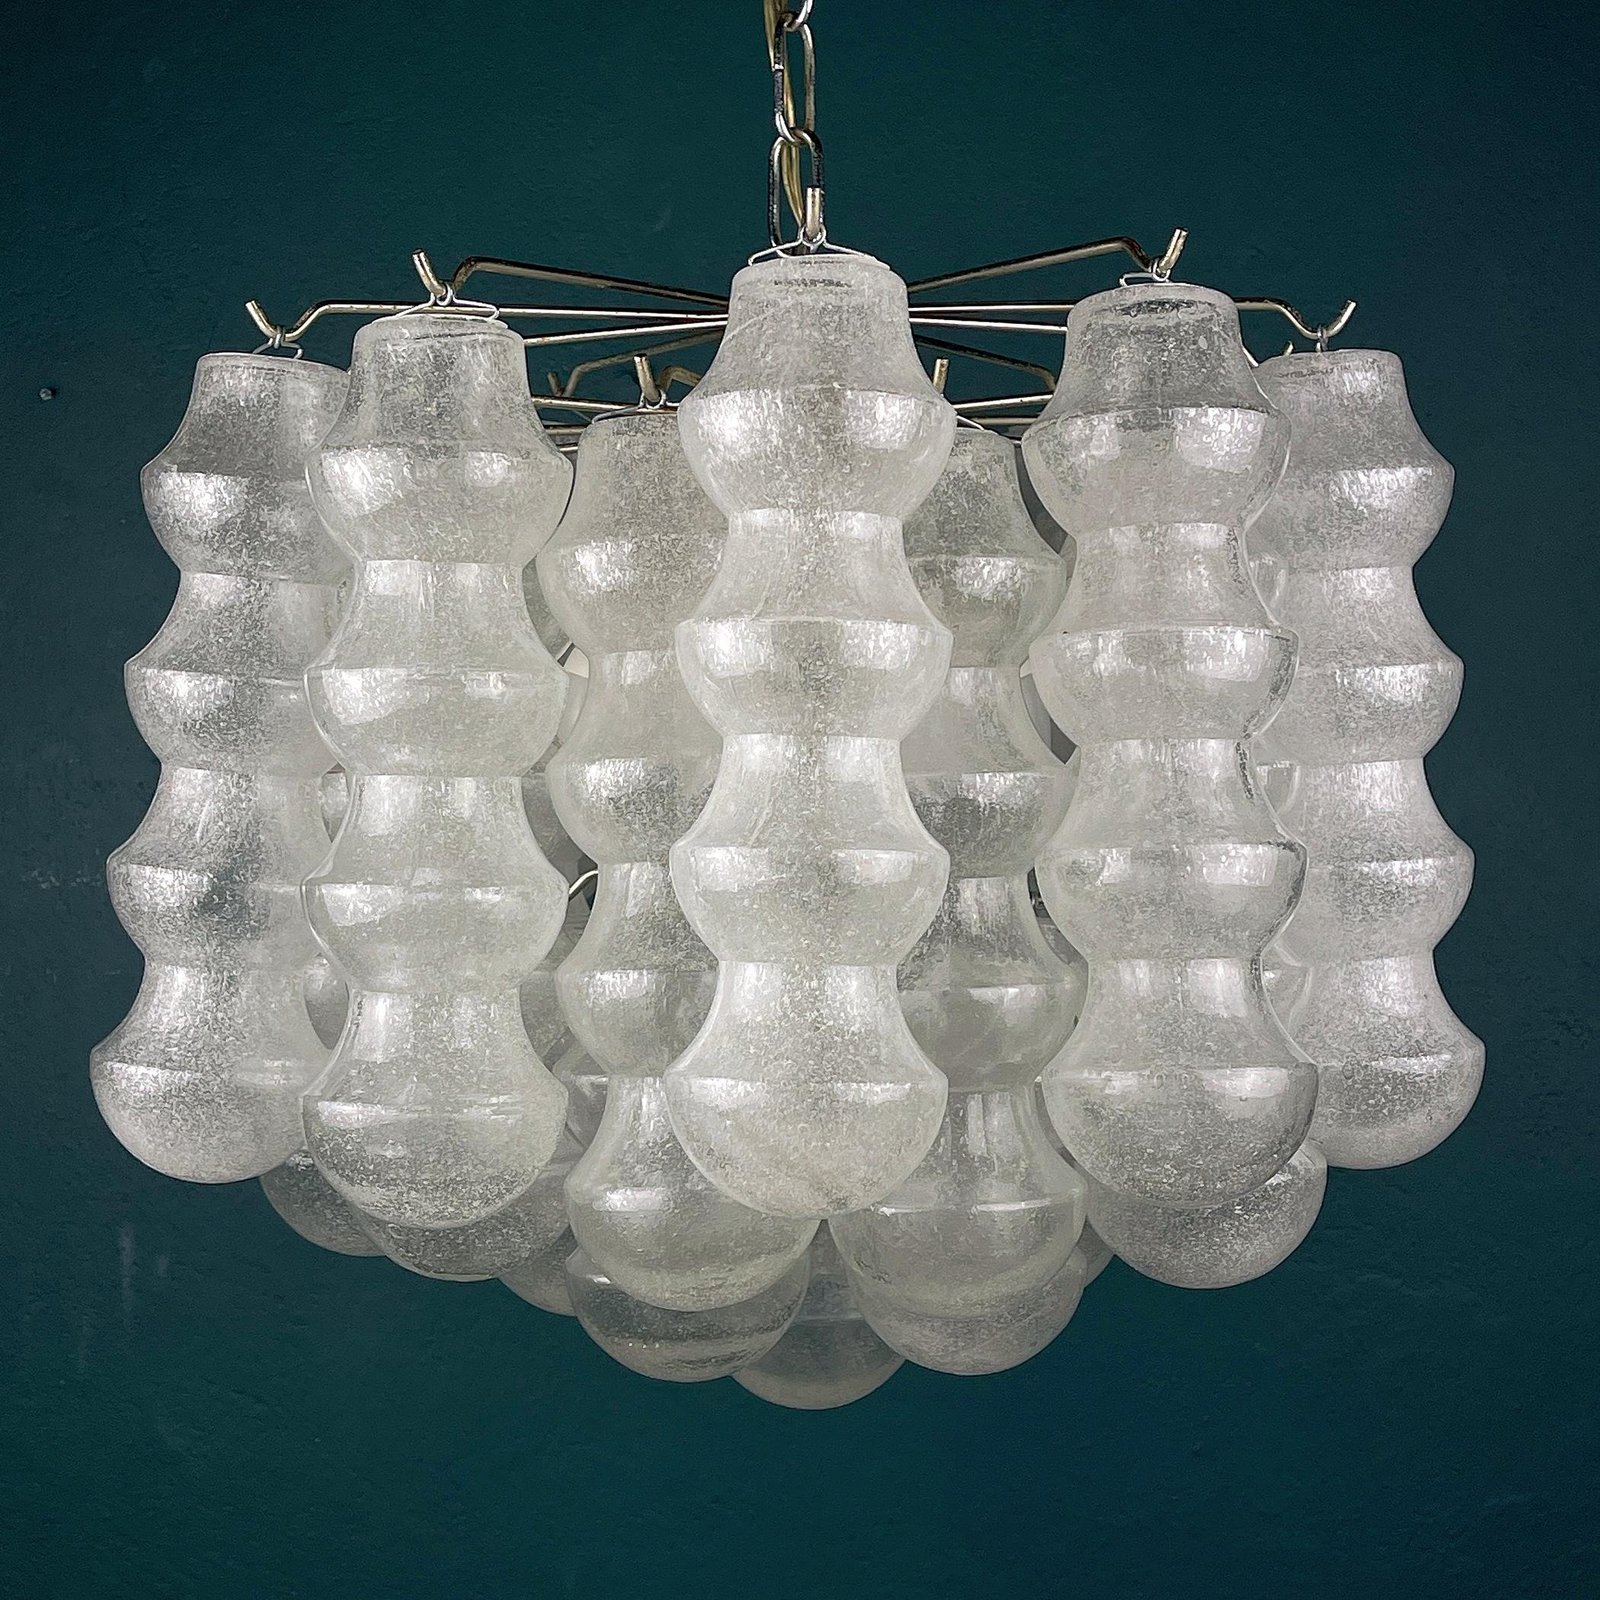 Mid-century murano glass chandelier Italy 1960s Italian home decor Vintage lighting